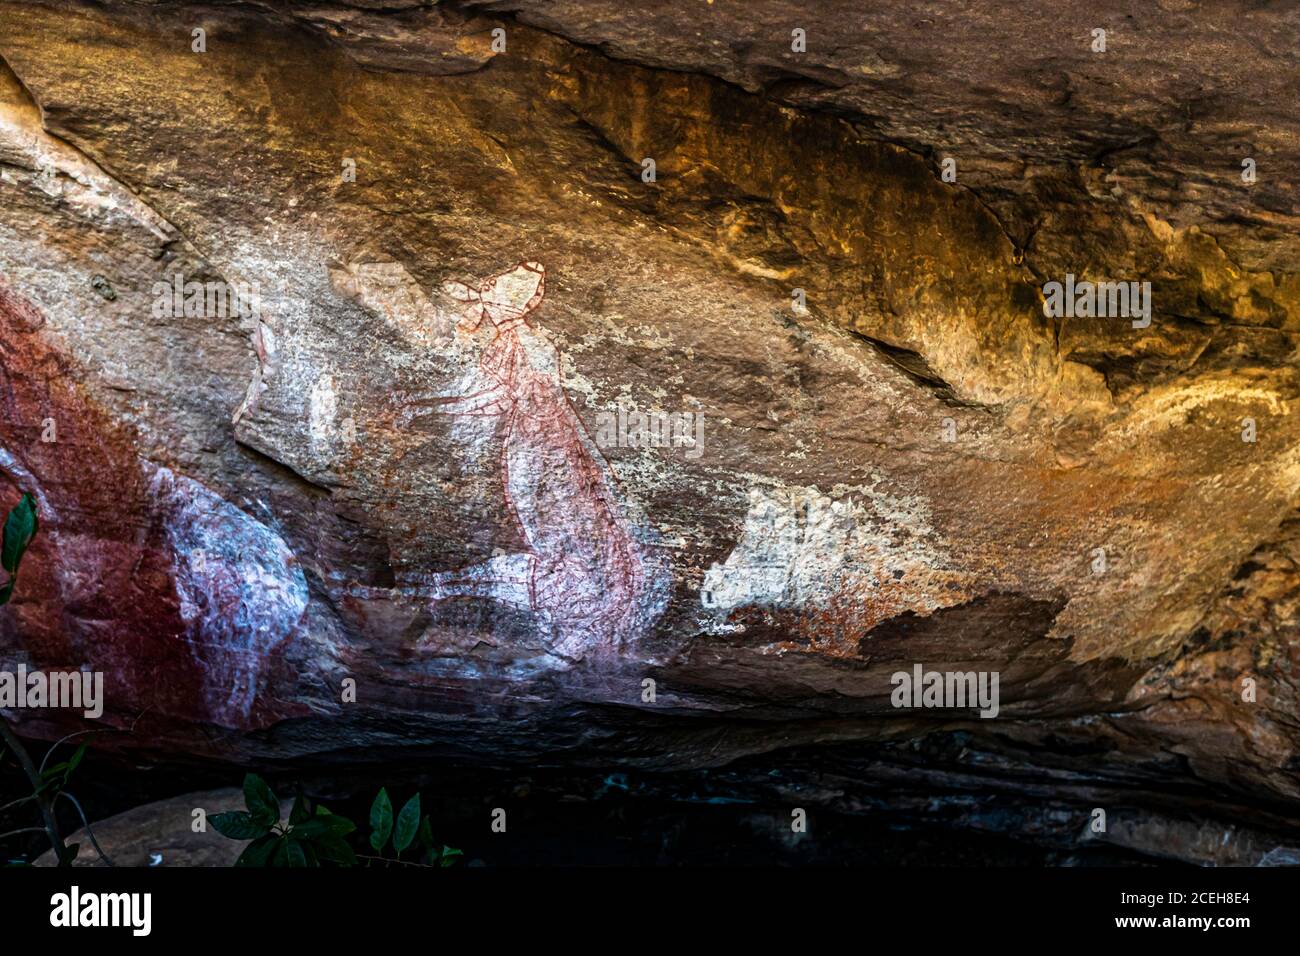 Native Guide explaining Aborigine Rock Art in Long Tom Dreaming, Gunbalanya, Australia Stock Photo